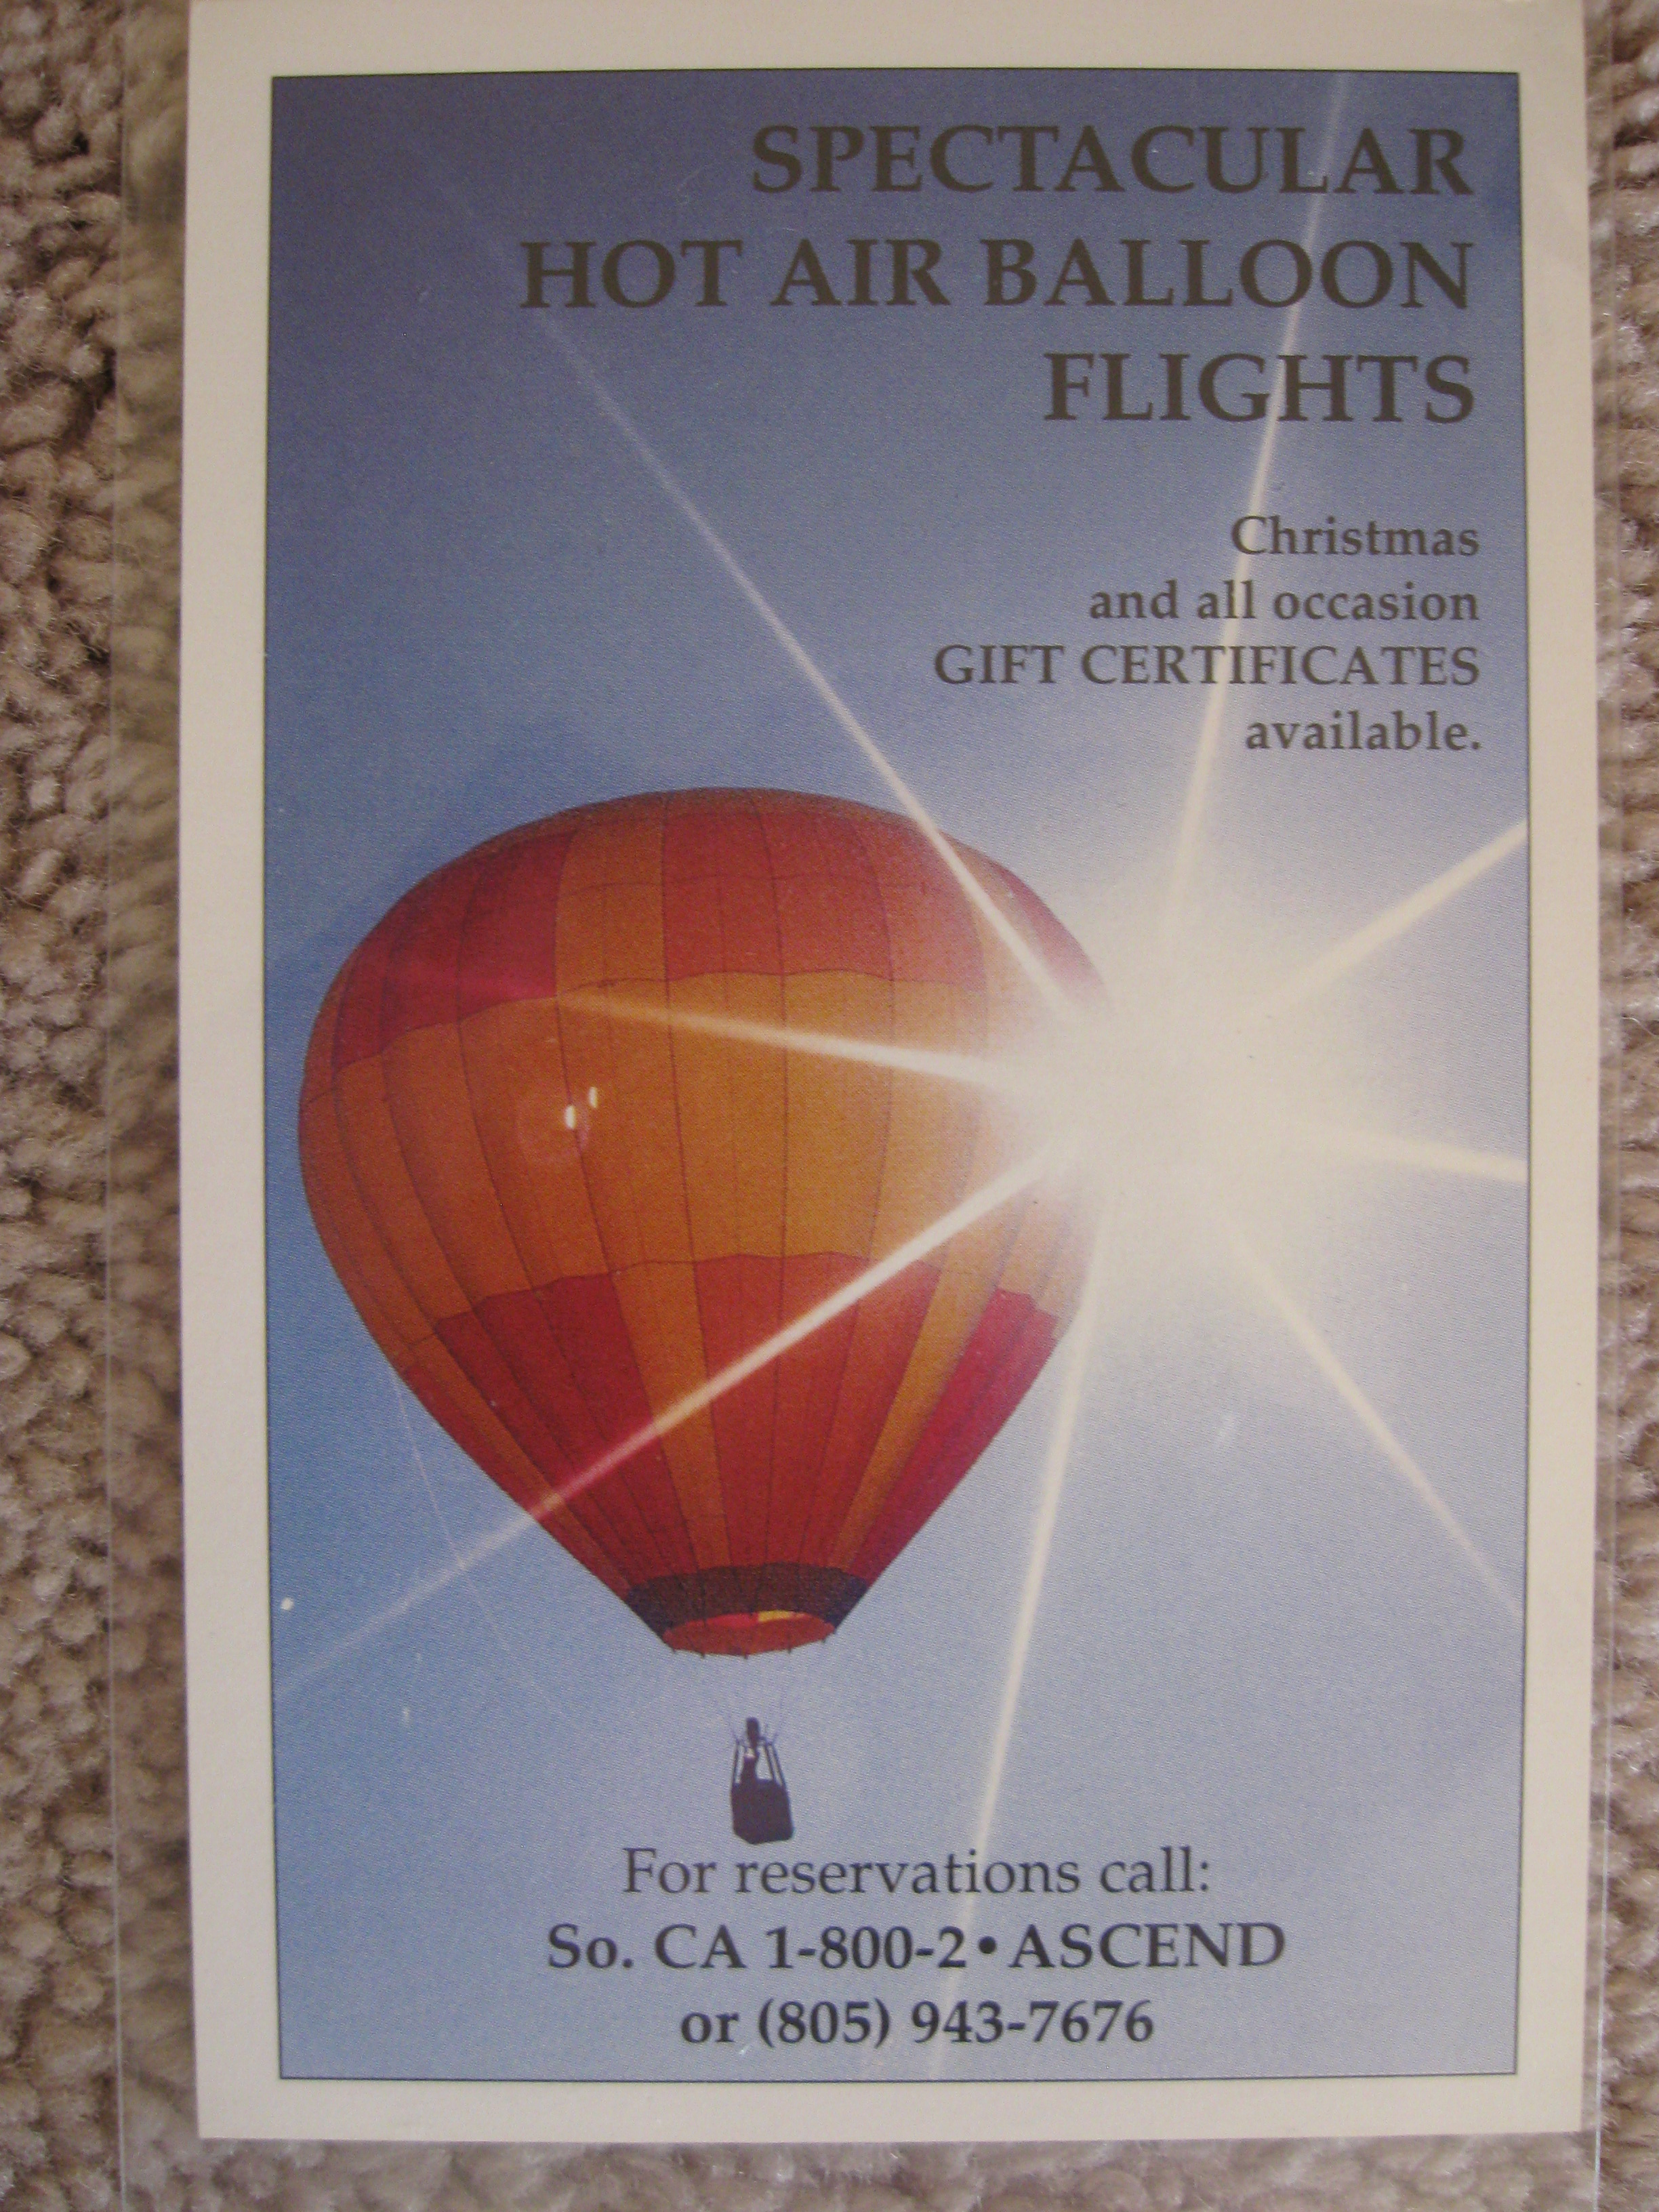 Spectacular hot air balloon flights